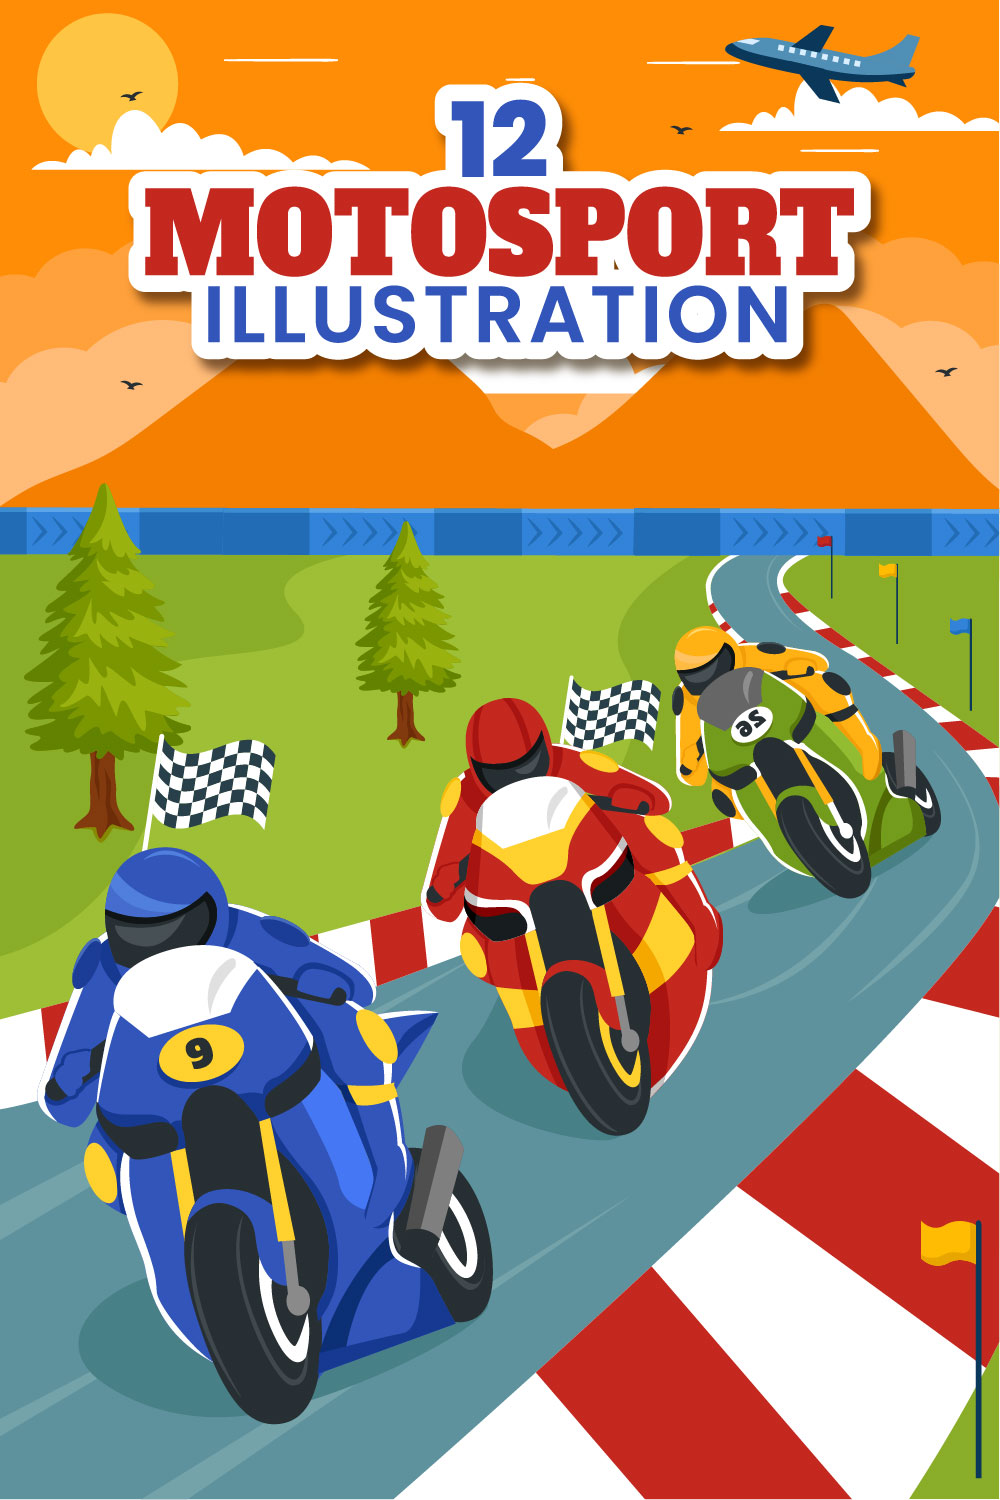 12 Racing Motosport Illustration pinterest preview image.